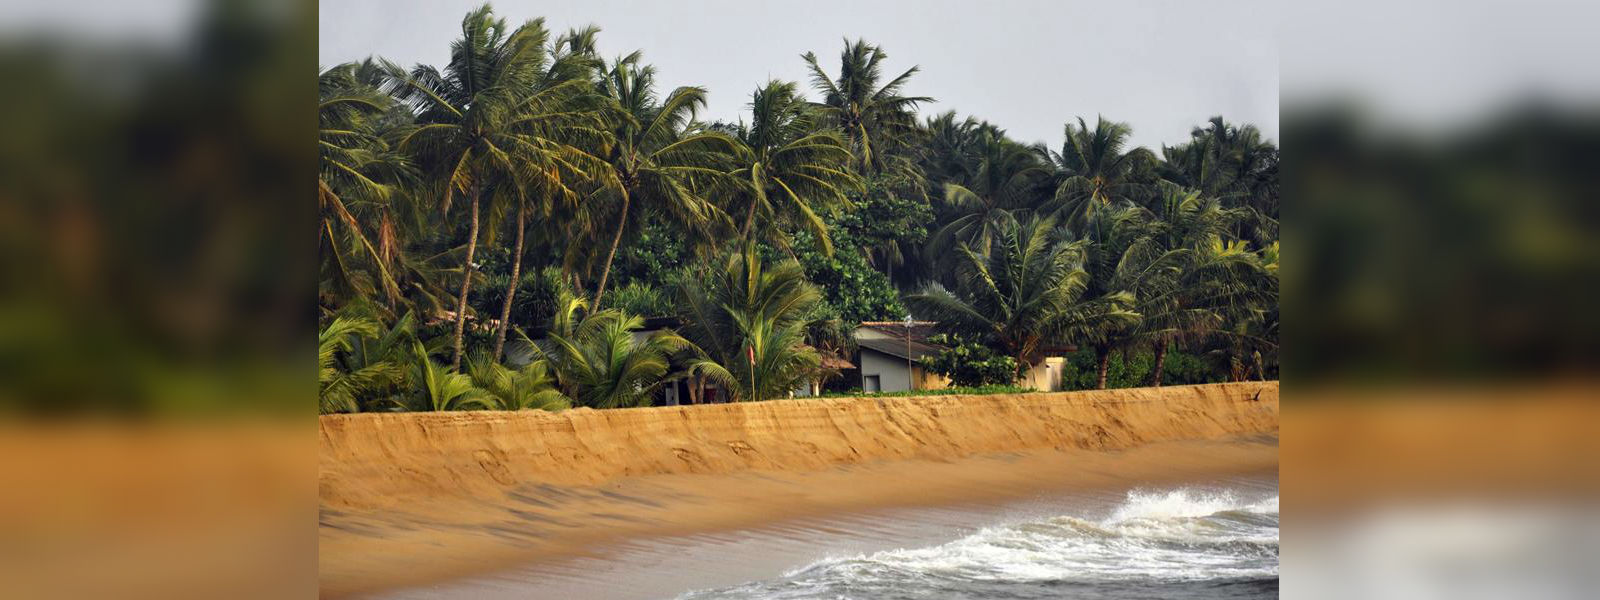 Fiance ministry denies funding to restore Kalido beach